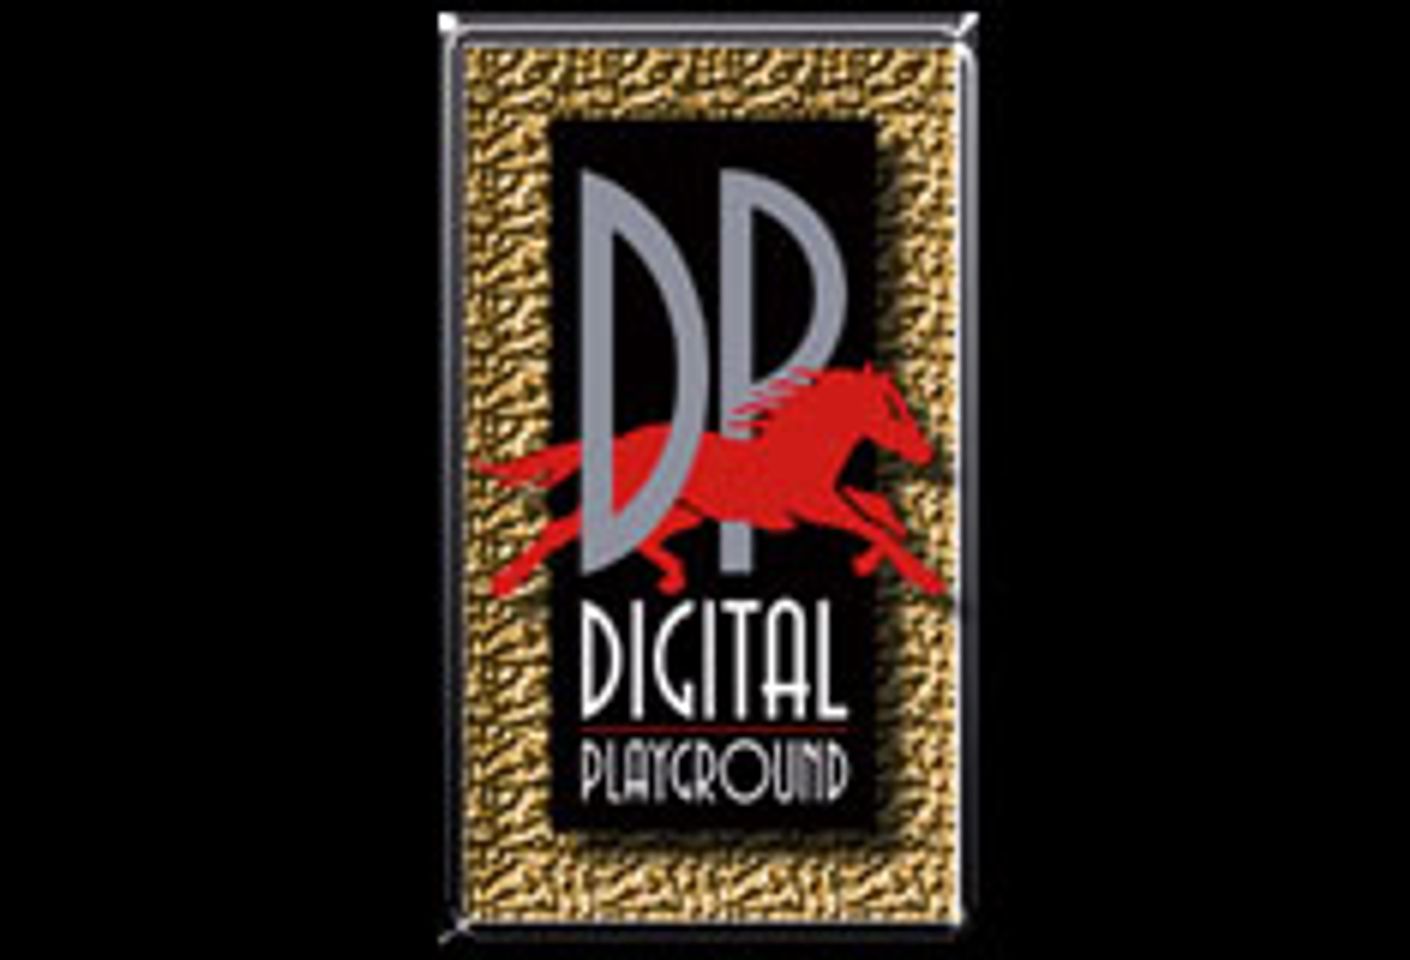 Digital Playground Takes AFW Comedy Awards